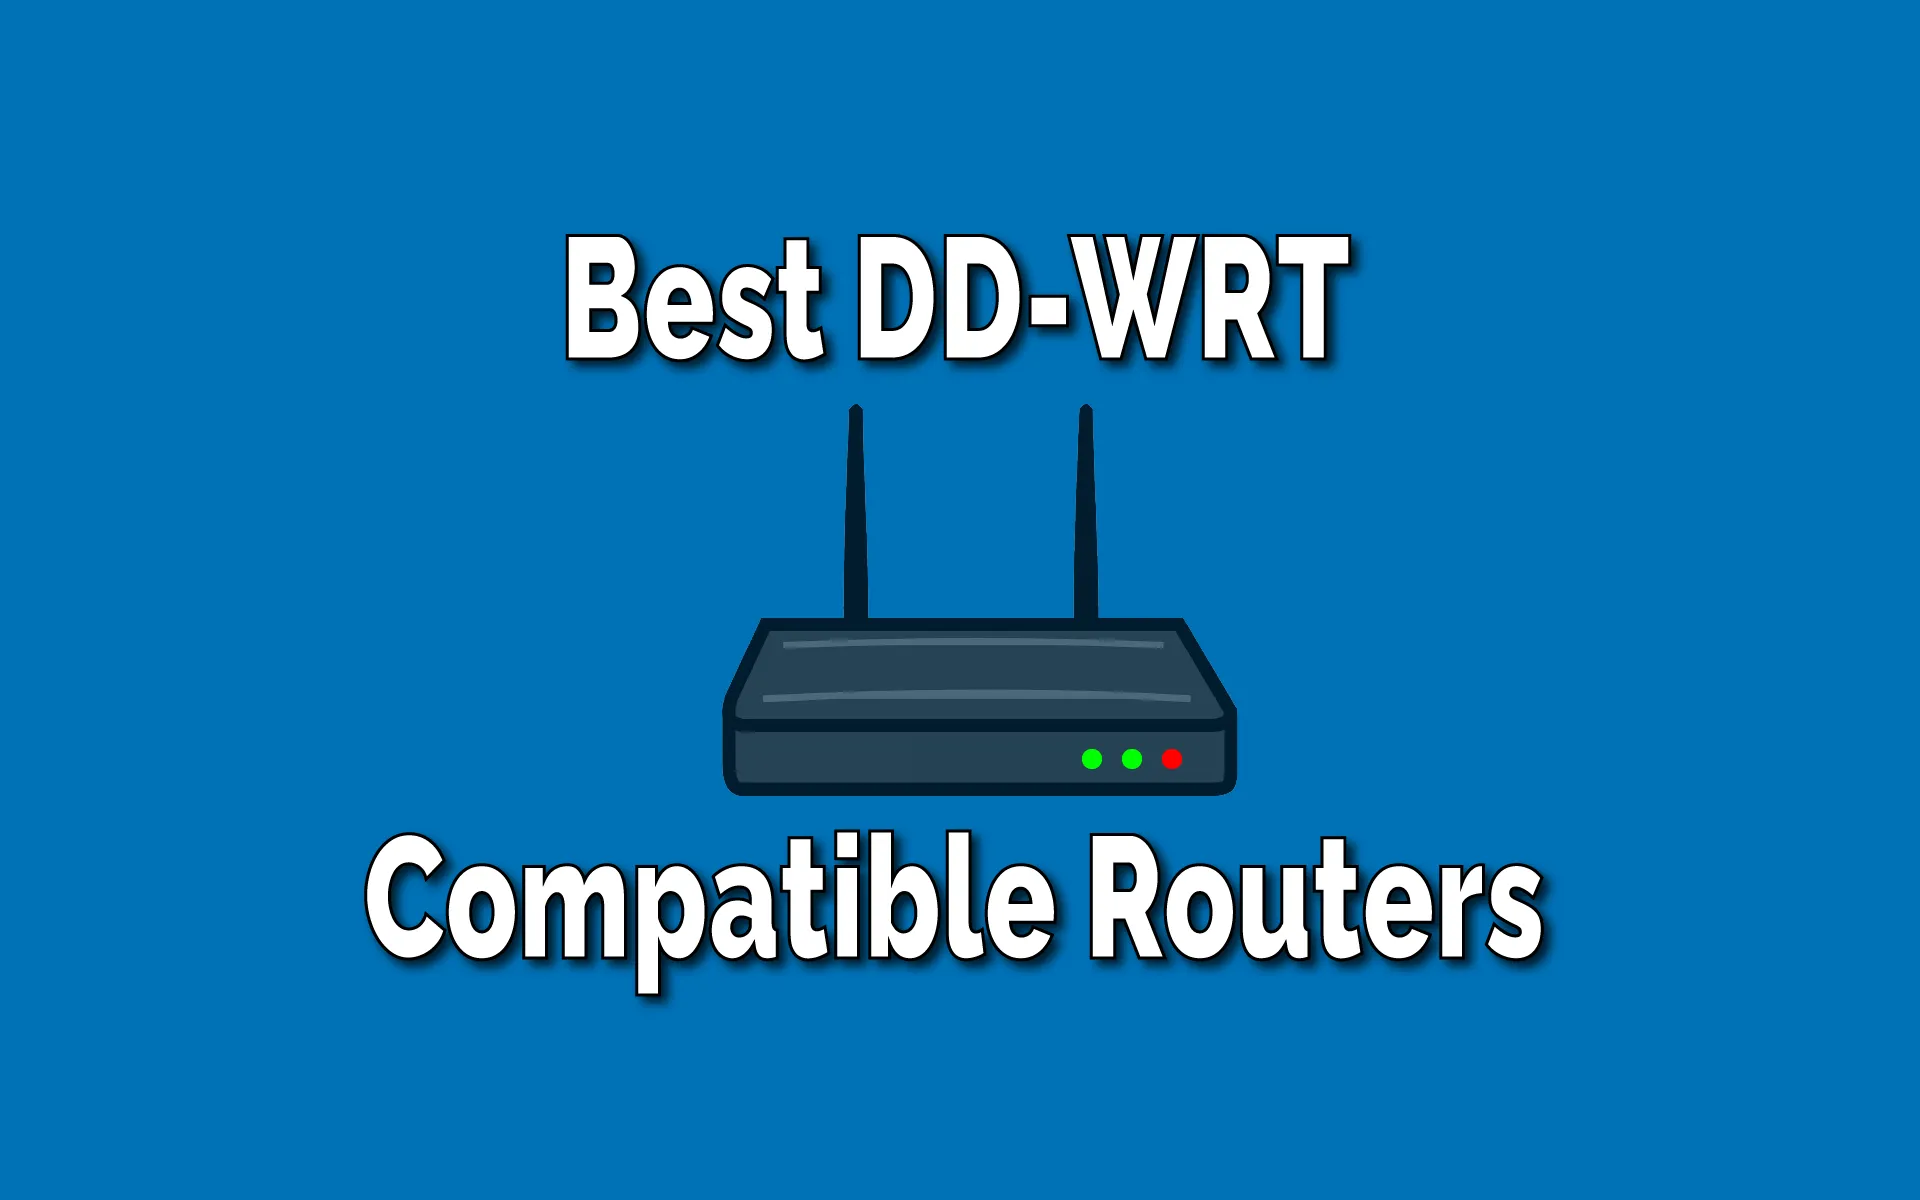 Hoorzitting Vrijwillig Gewoon Best DD-WRT Router You Can Buy in 2022 - TechSphinx